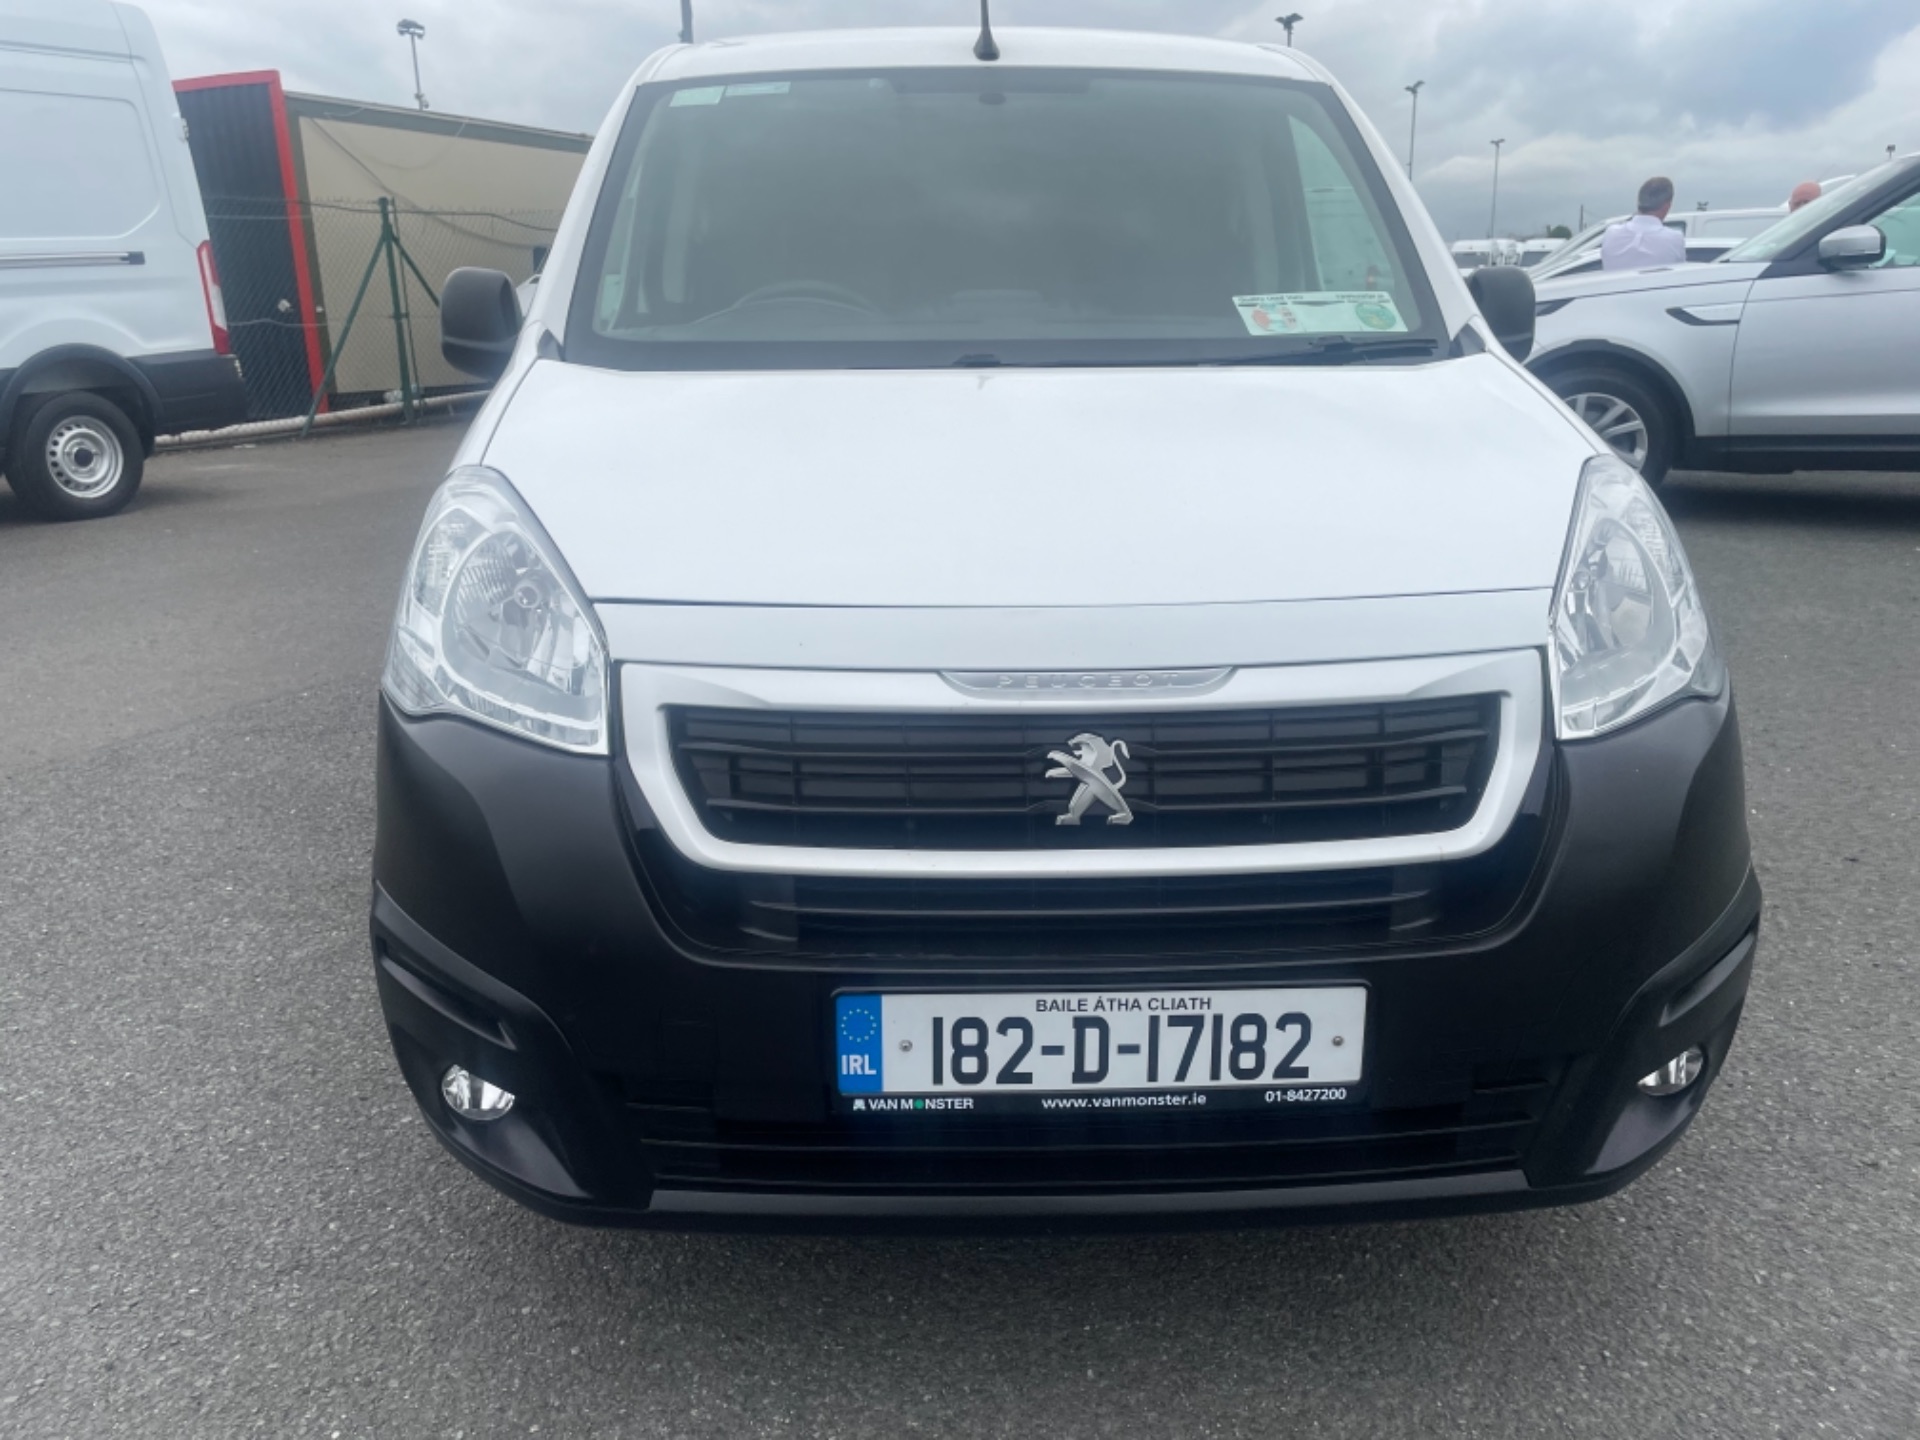 2018 Peugeot Partner Professional 1.6 Blue HDI 100 (182D17182) Thumbnail 2